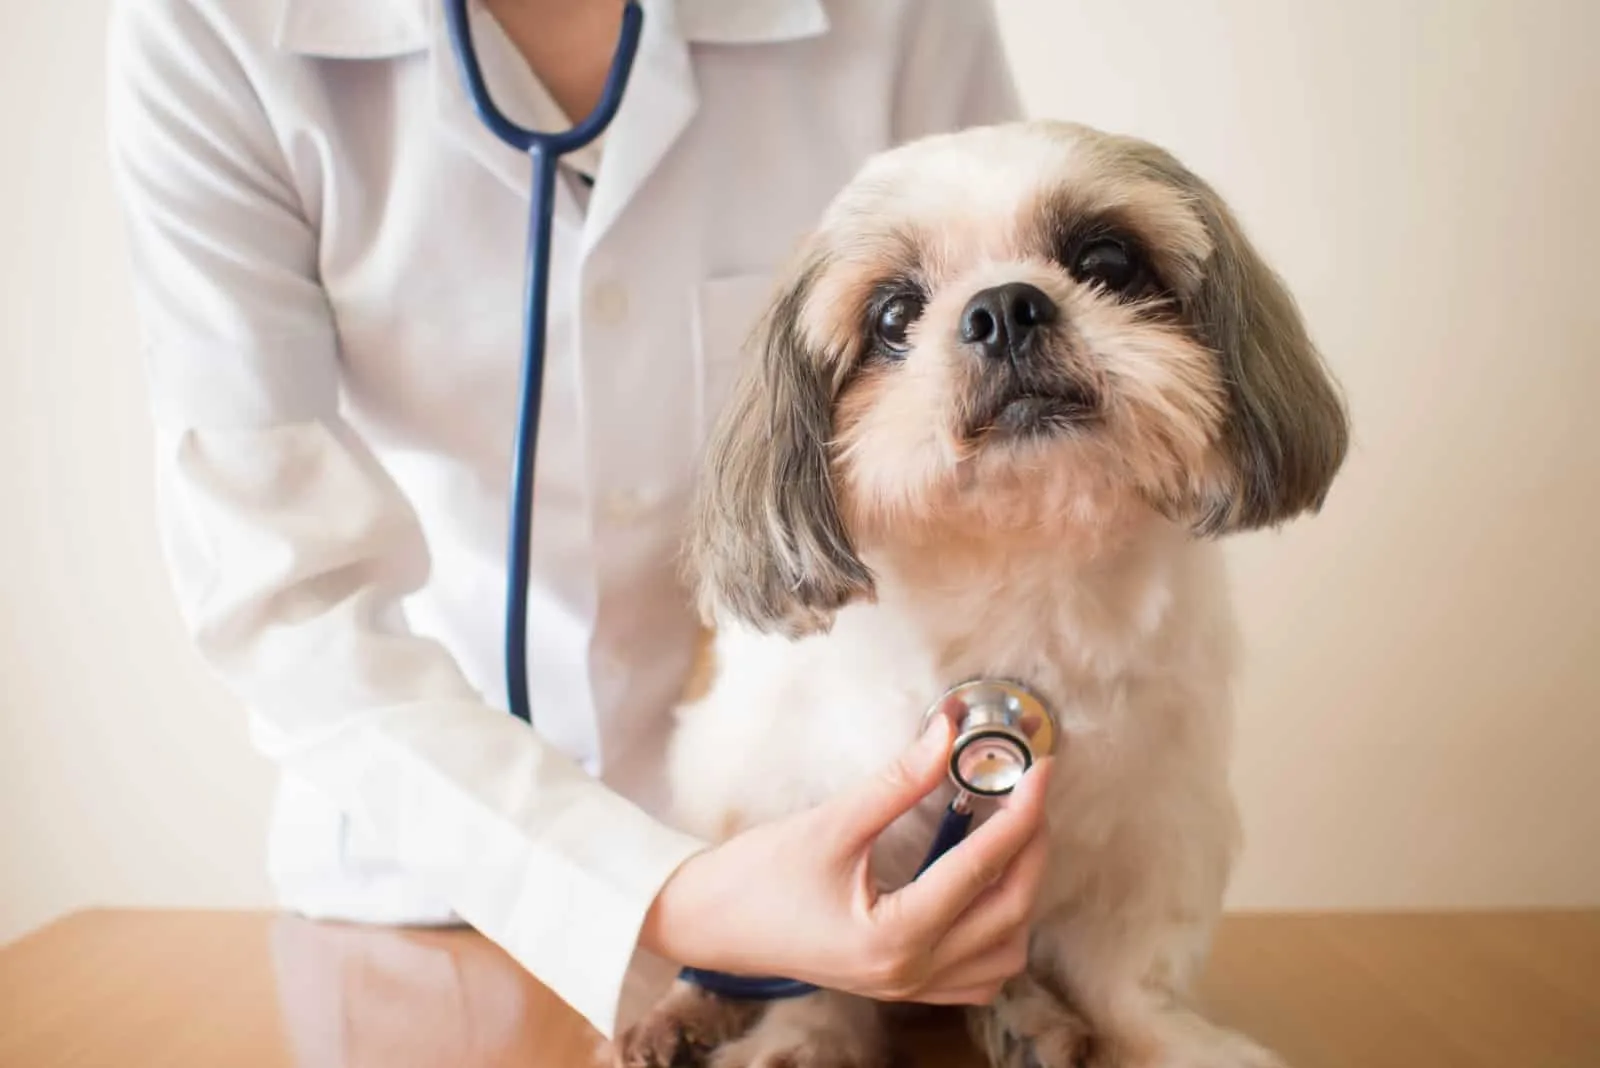 veterinarian doctor examining Shih tzu dog with stethoscope